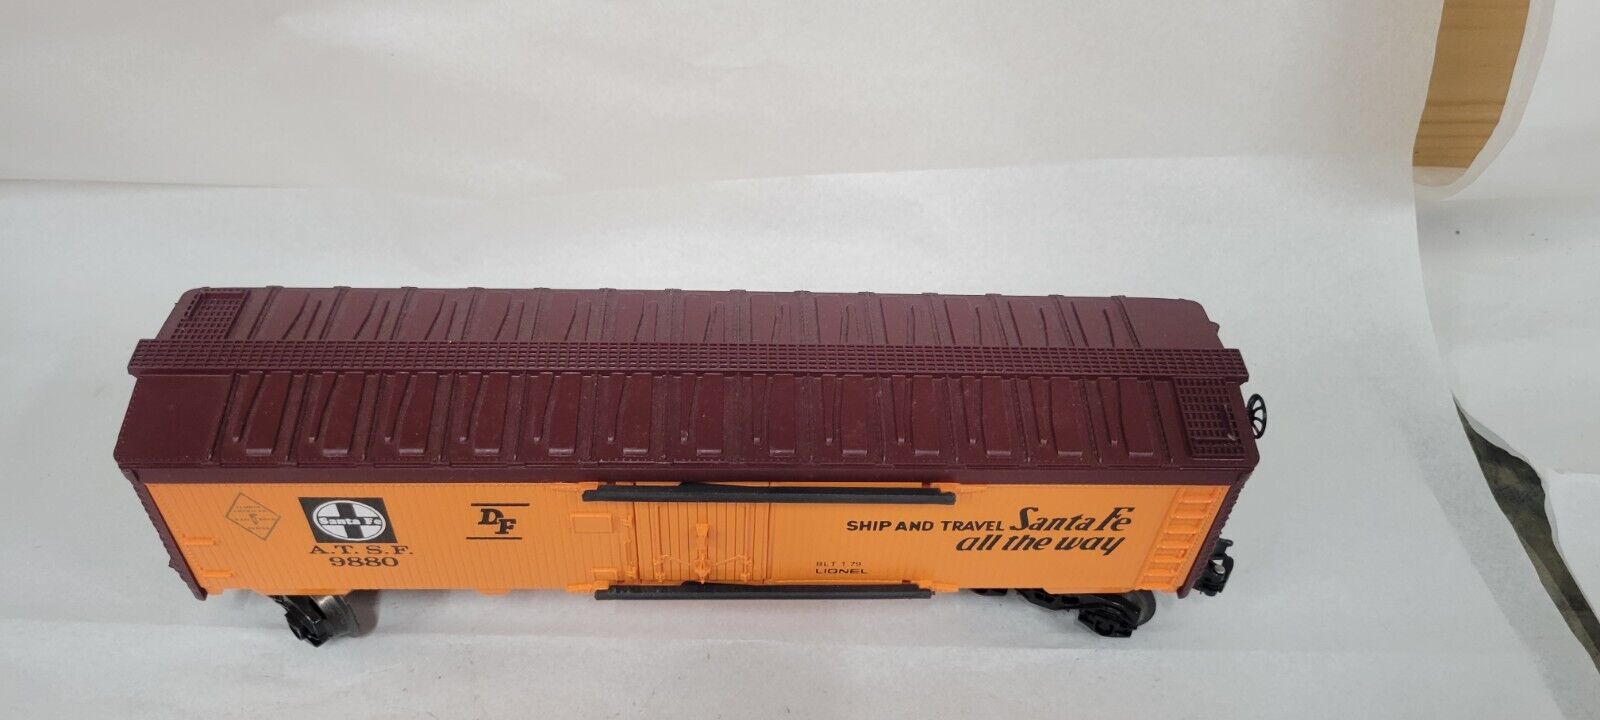 Lionel 6-9880 O Gauge AT&SF Famous American Railroad Refrigerator Car /Box